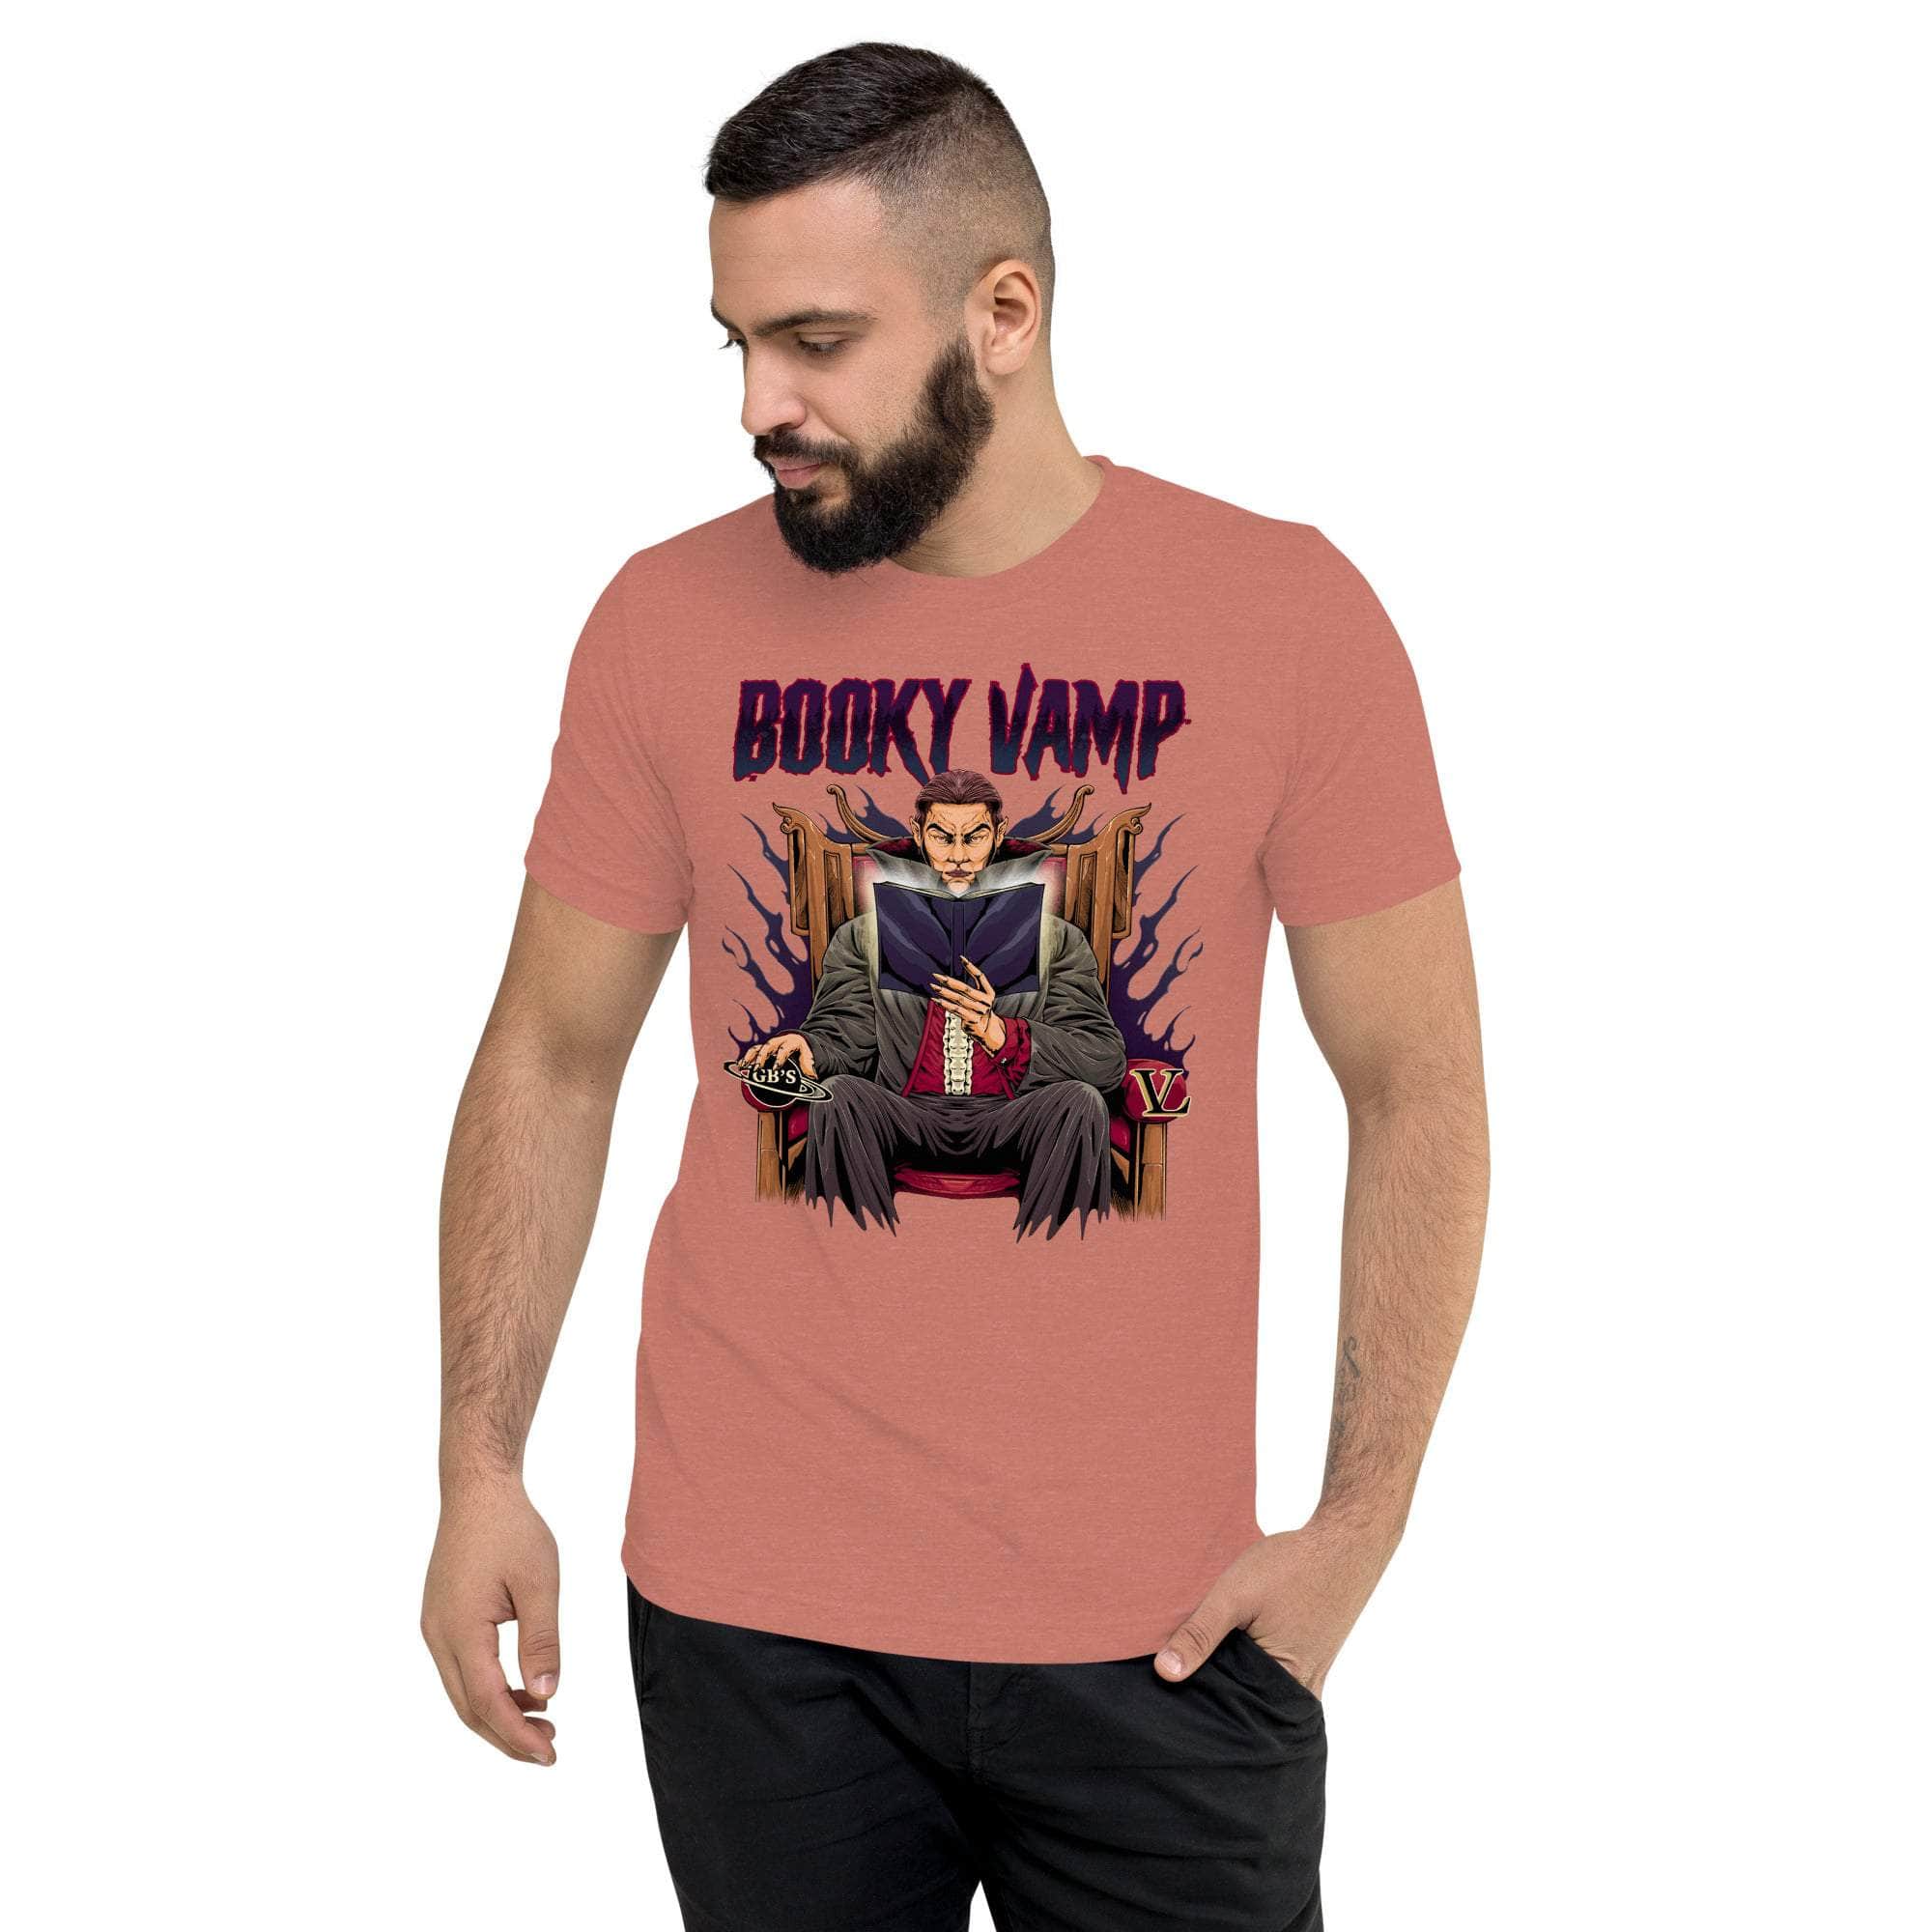 GBNY Mauve Triblend / XS Vamp Life X GBNY "Booky Vamp" T-shirt - Men's 2381652_9761